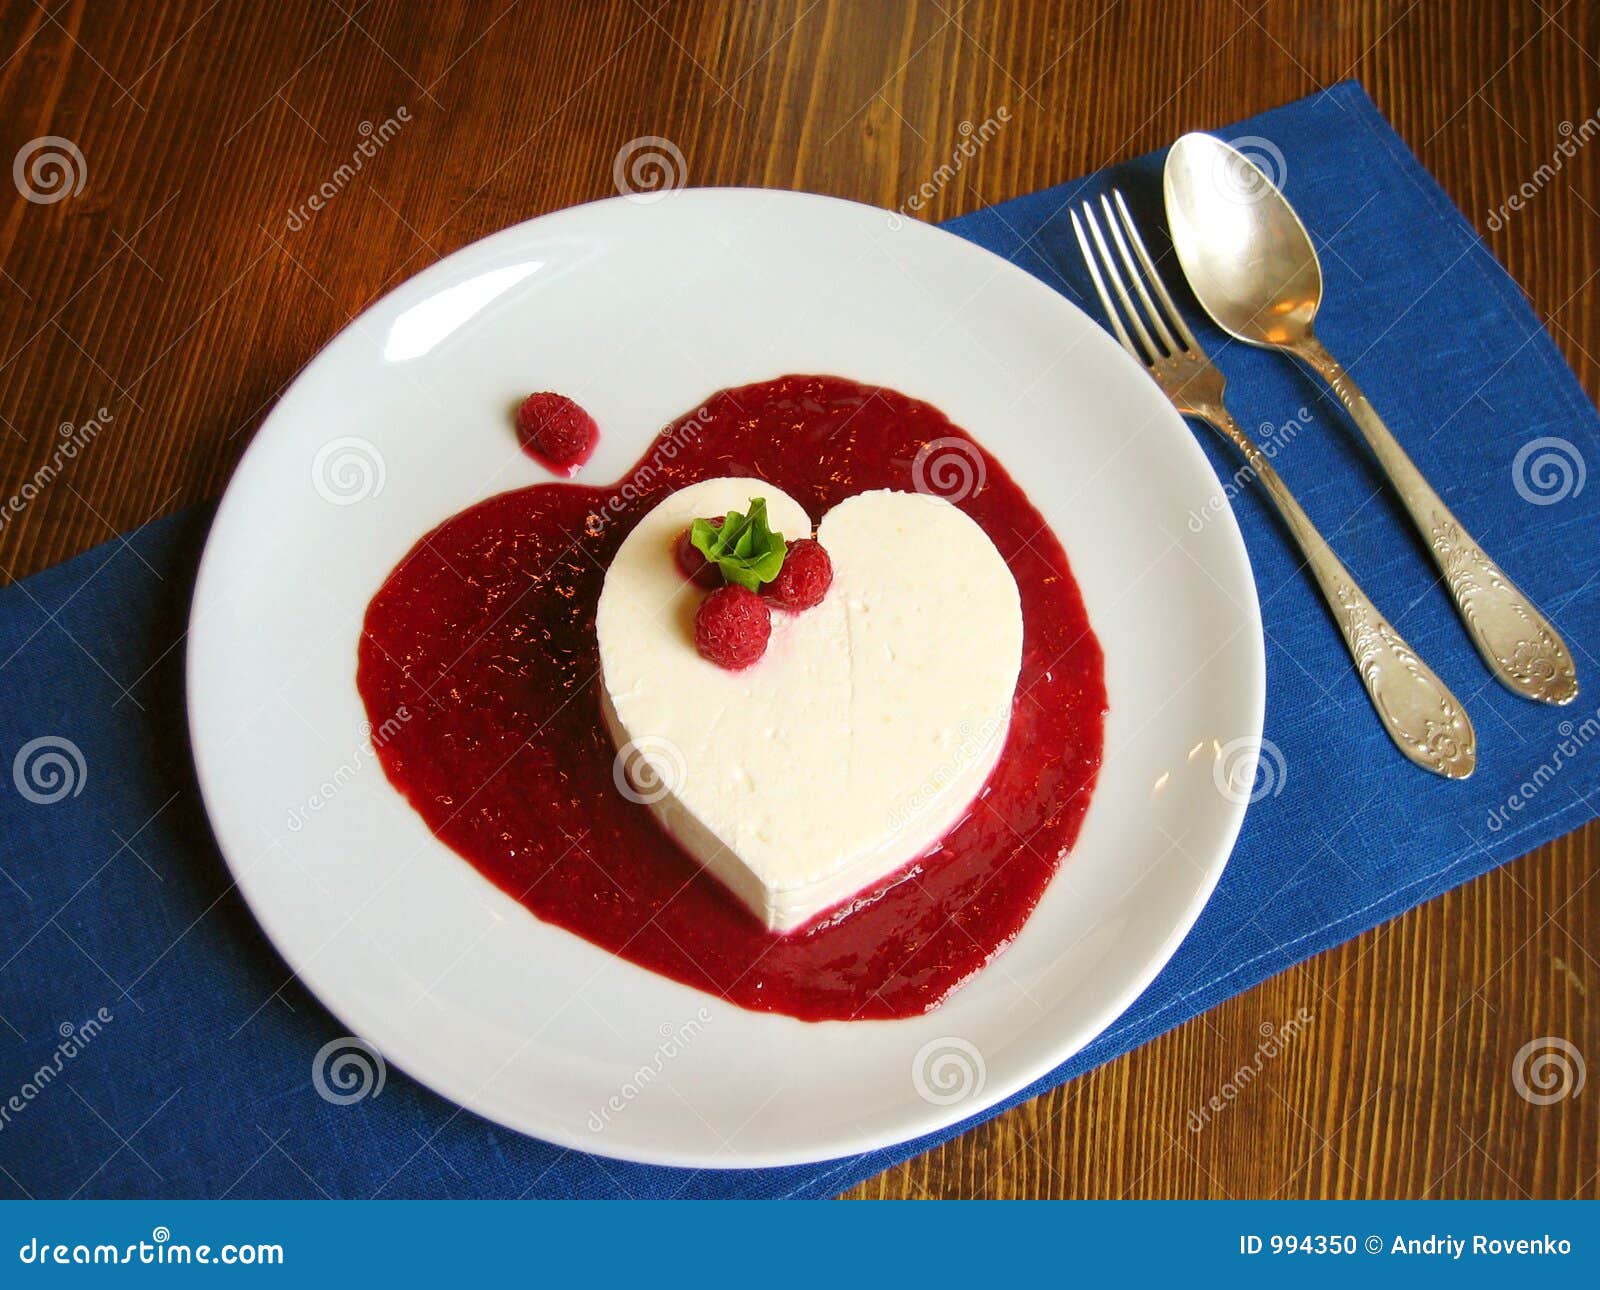 Heart dessert stock photo. Image of delights, pink, menu - 994350